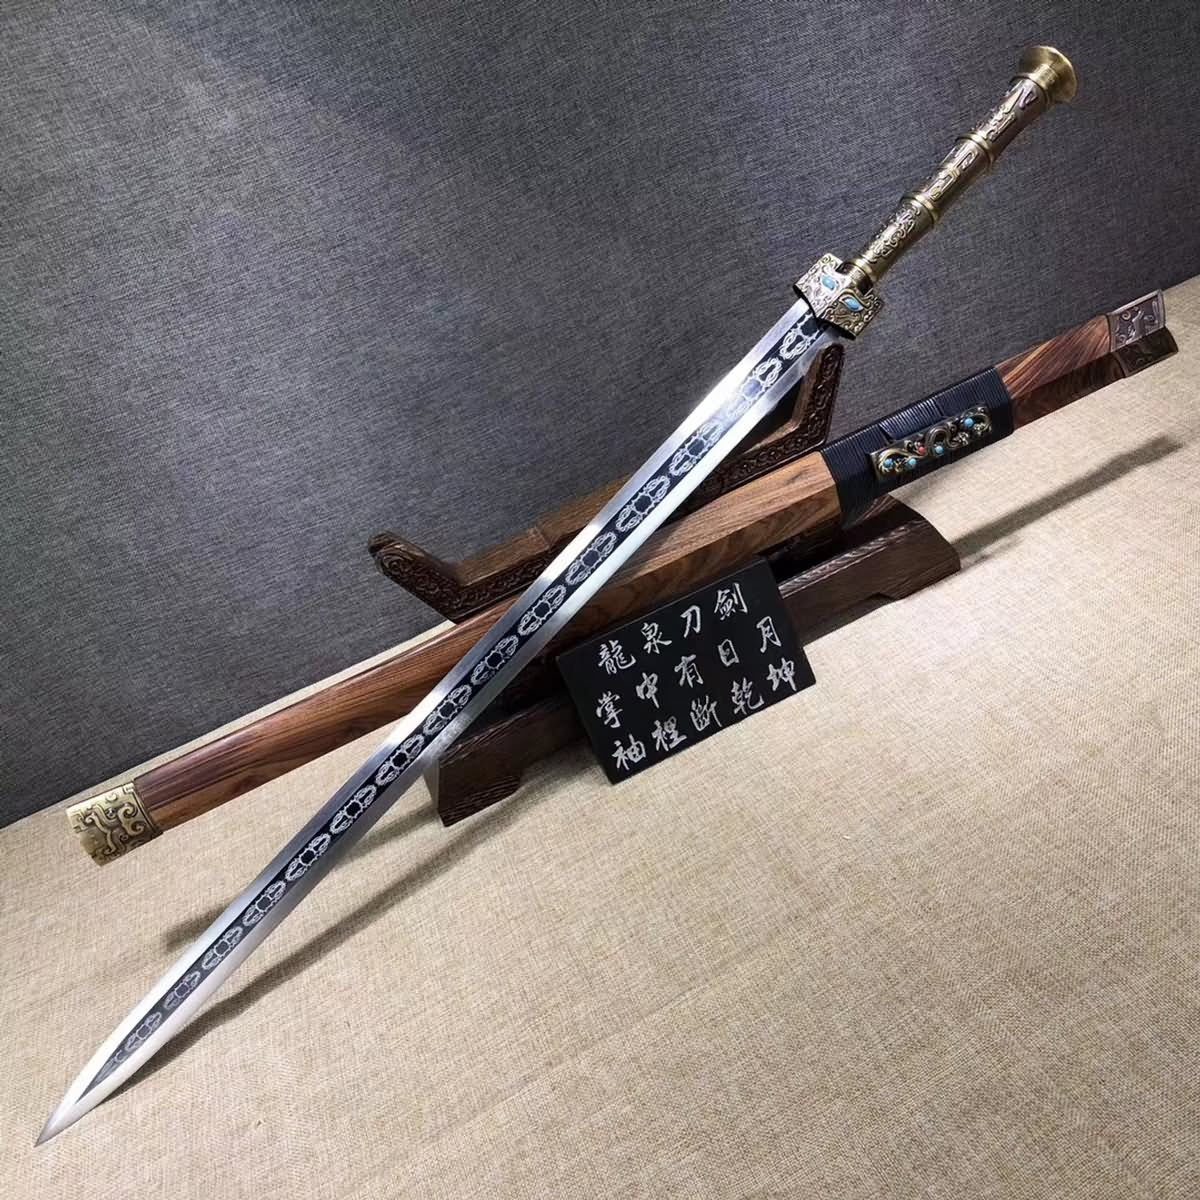 Han jian sword,Handmade high carbon steel blade,Alloy handle - Chinese sword shop